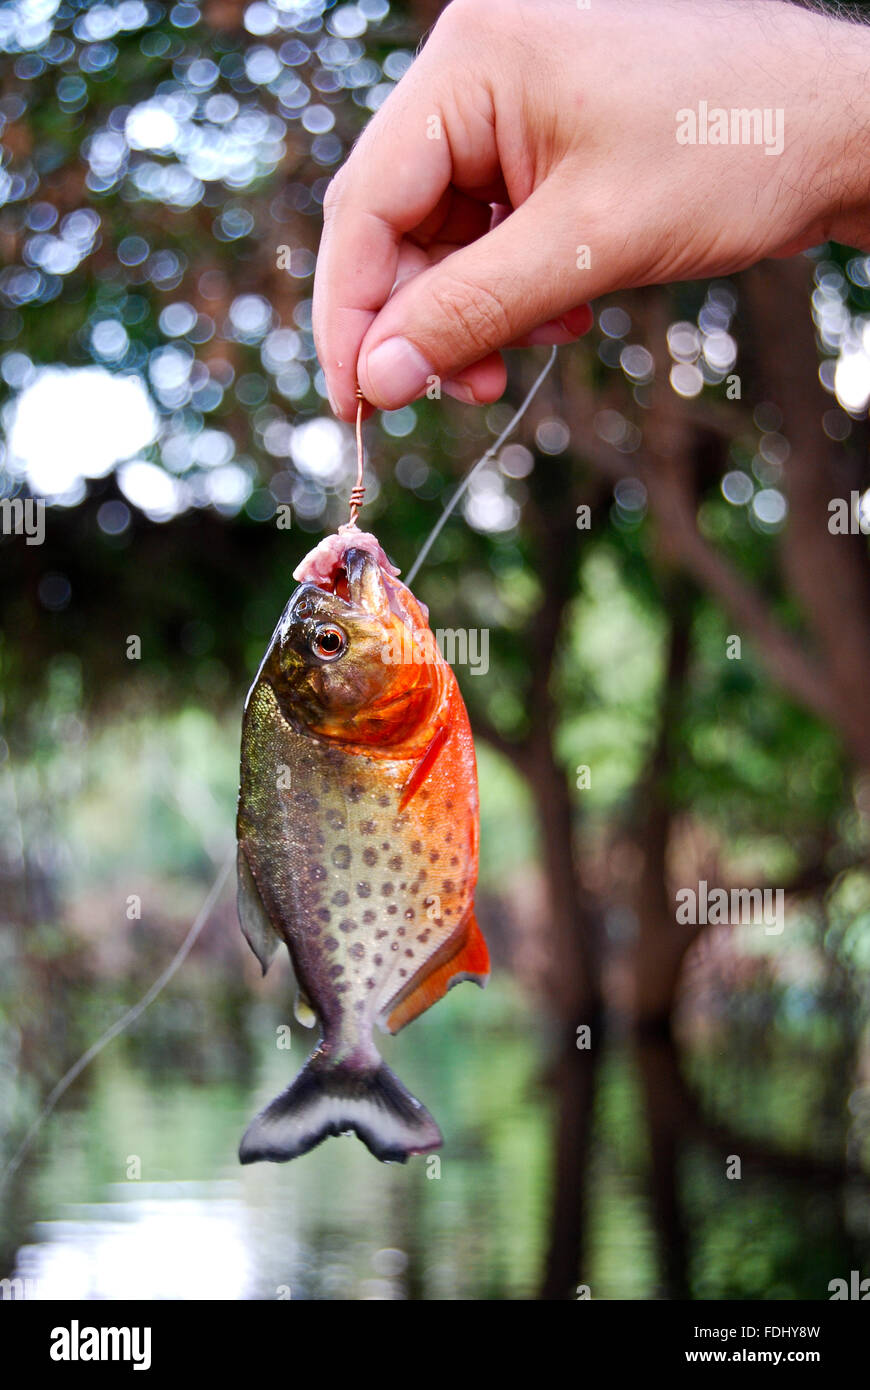 rainforest: Piranha fishing in the  River near Manaus